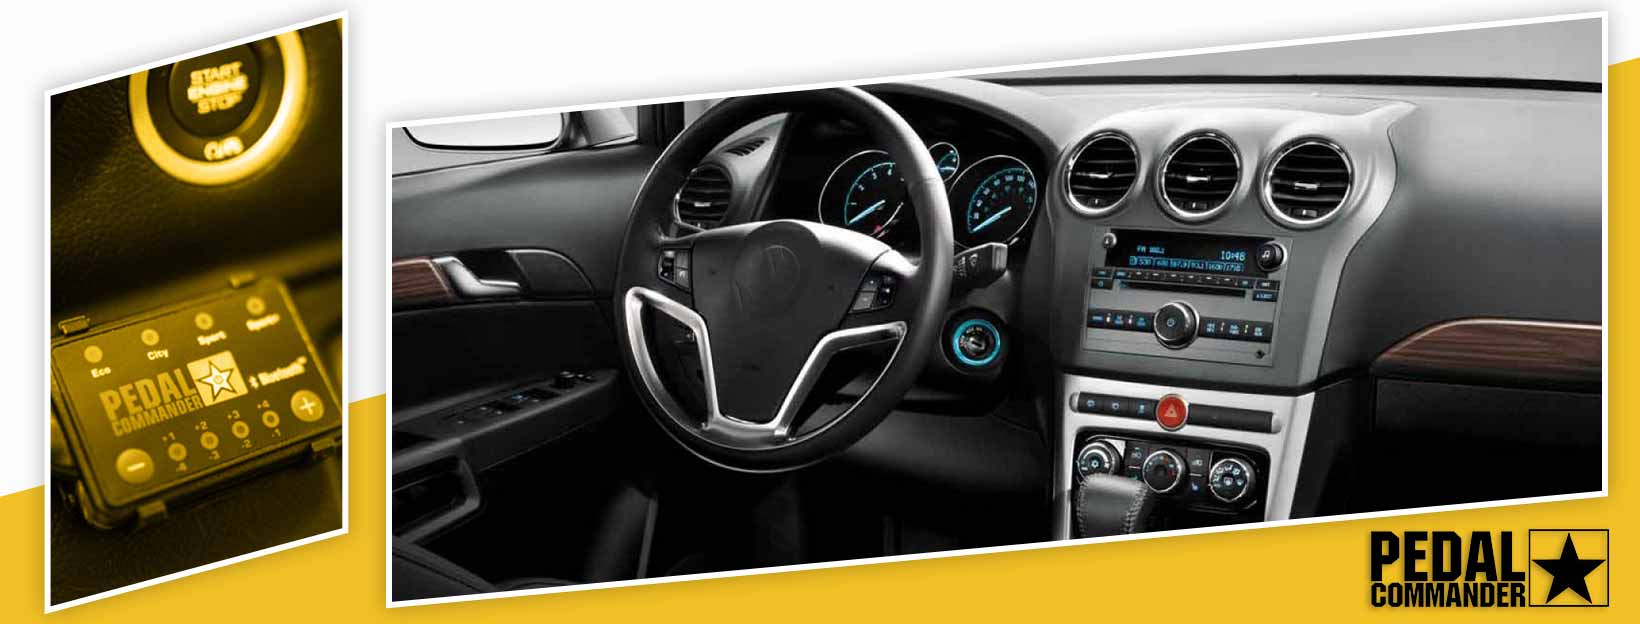 Pedal Commander for Chevrolet Captiva Sport - interior